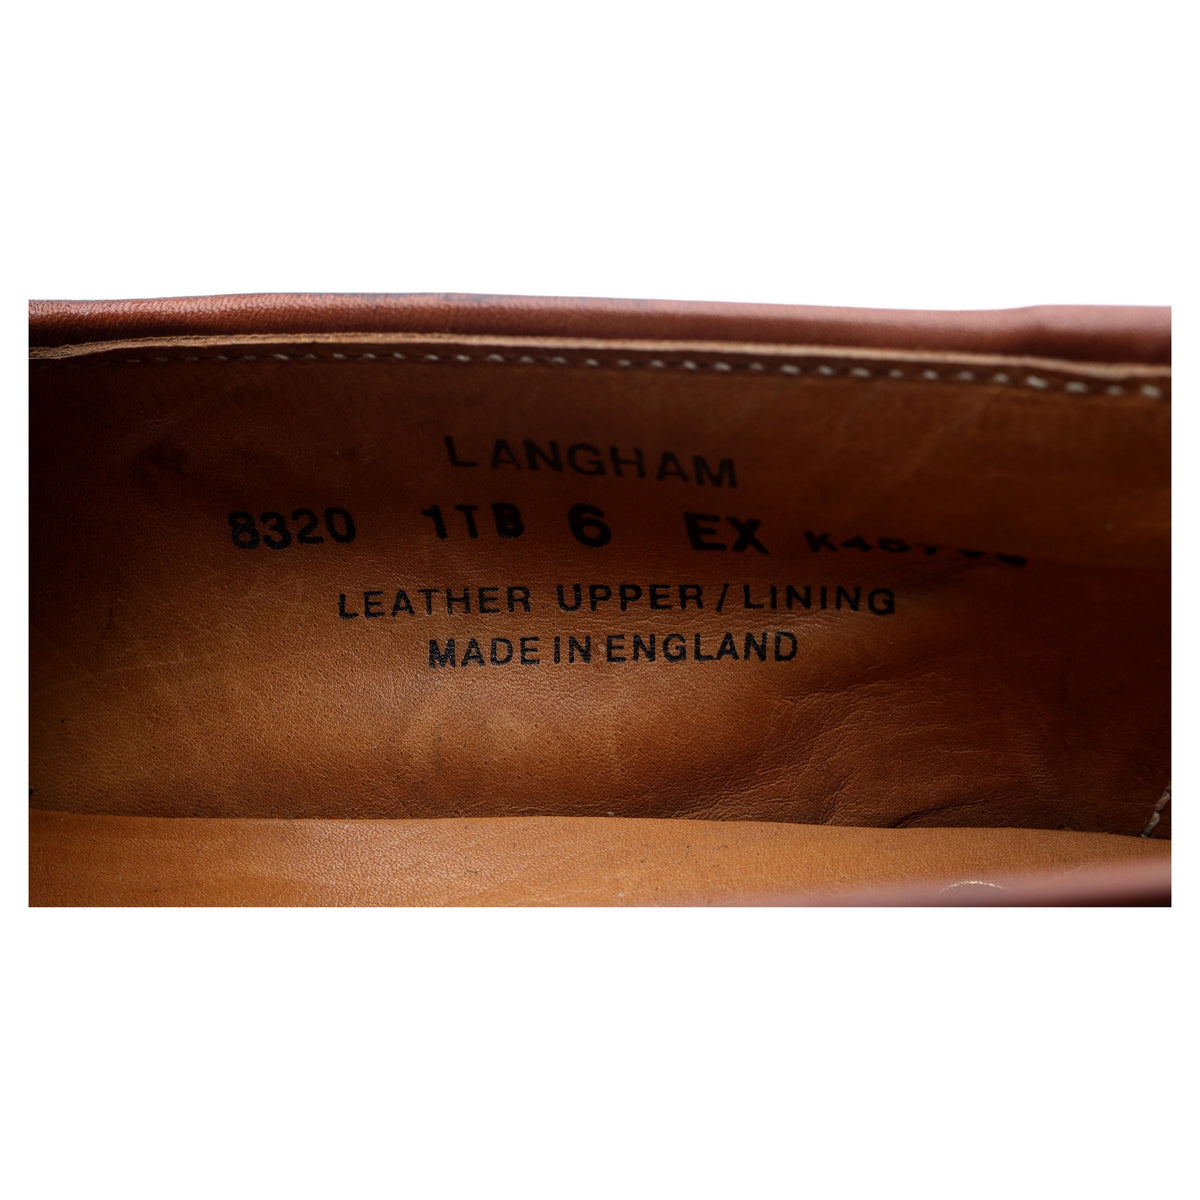 &#39;Langham&#39; Tan Brown Leather Tassel Loafers UK 6 EX